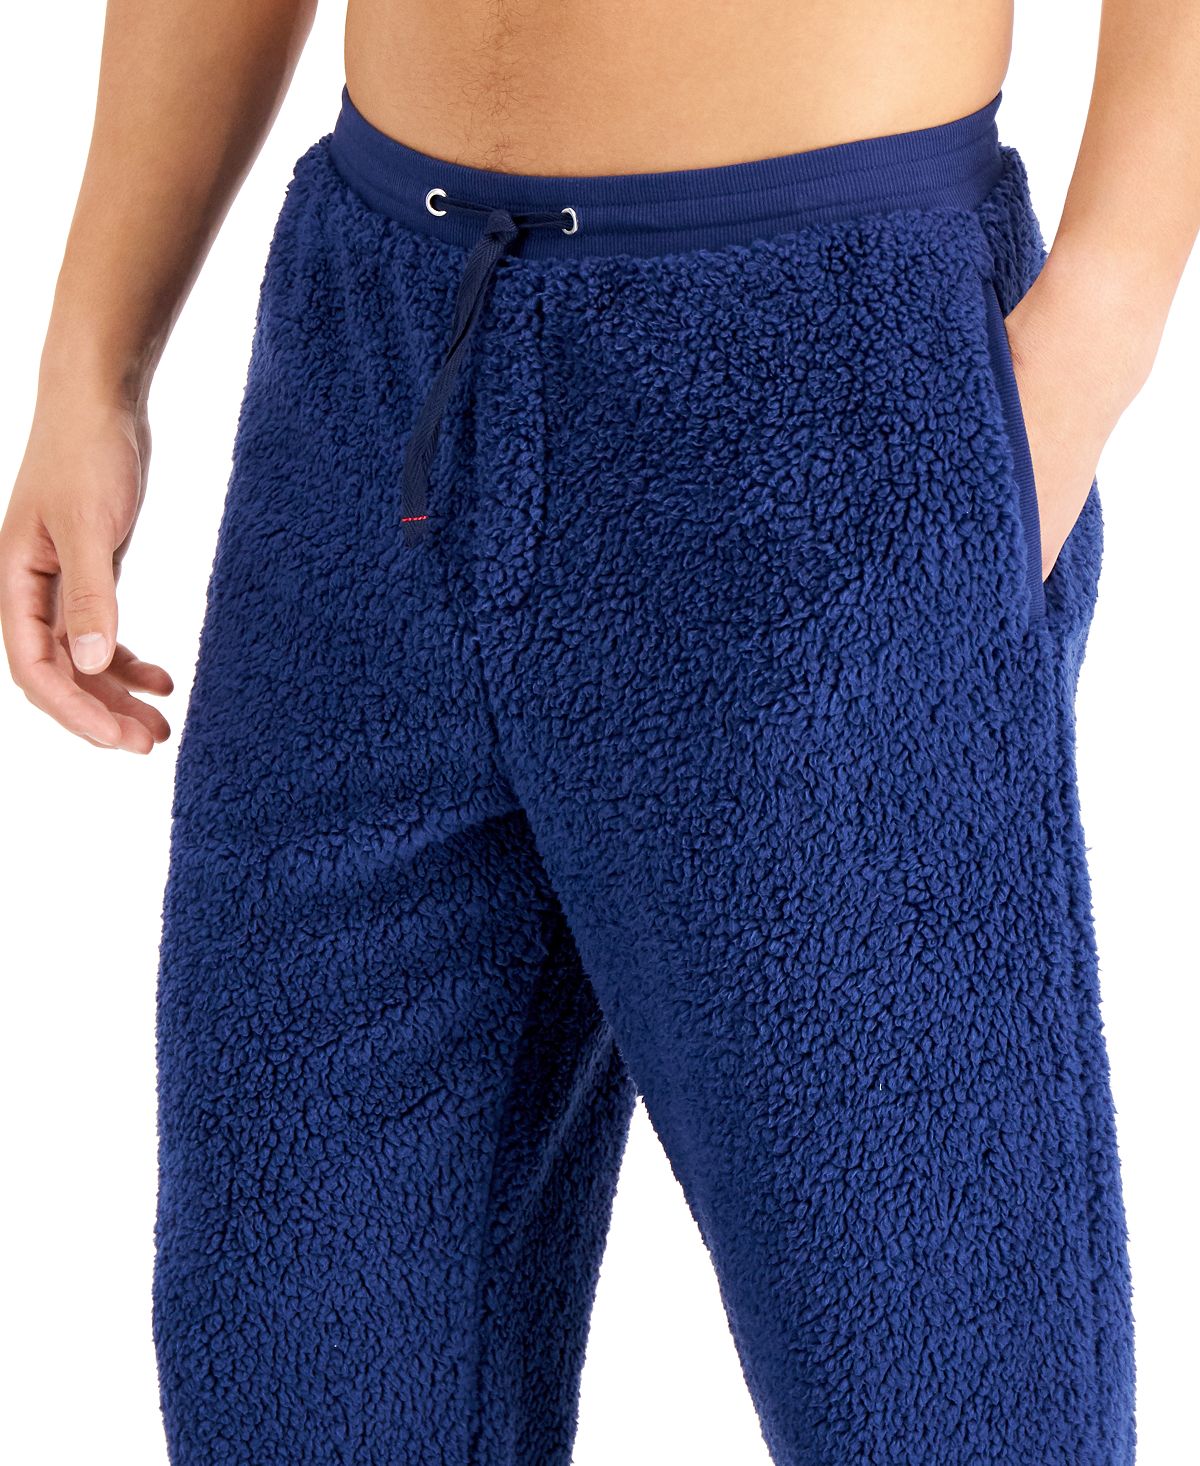 Club Room Fleece Pajama Pants Blue Heather